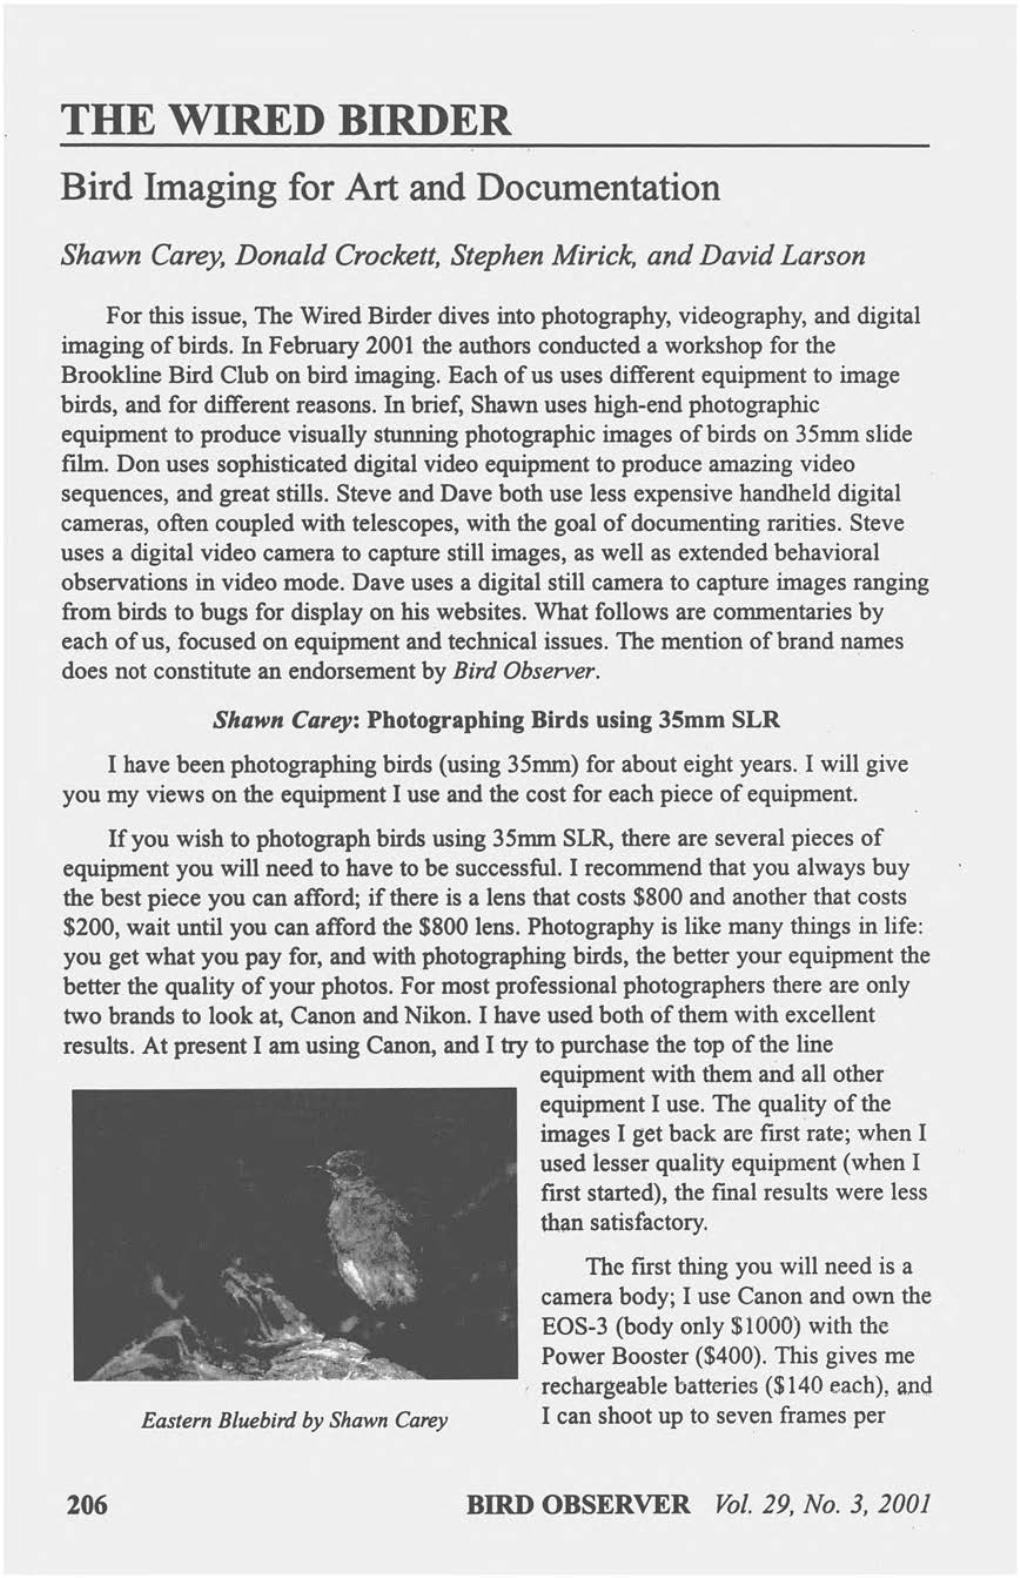 Birdobserver29.3 Page206-214 the Wired Birder